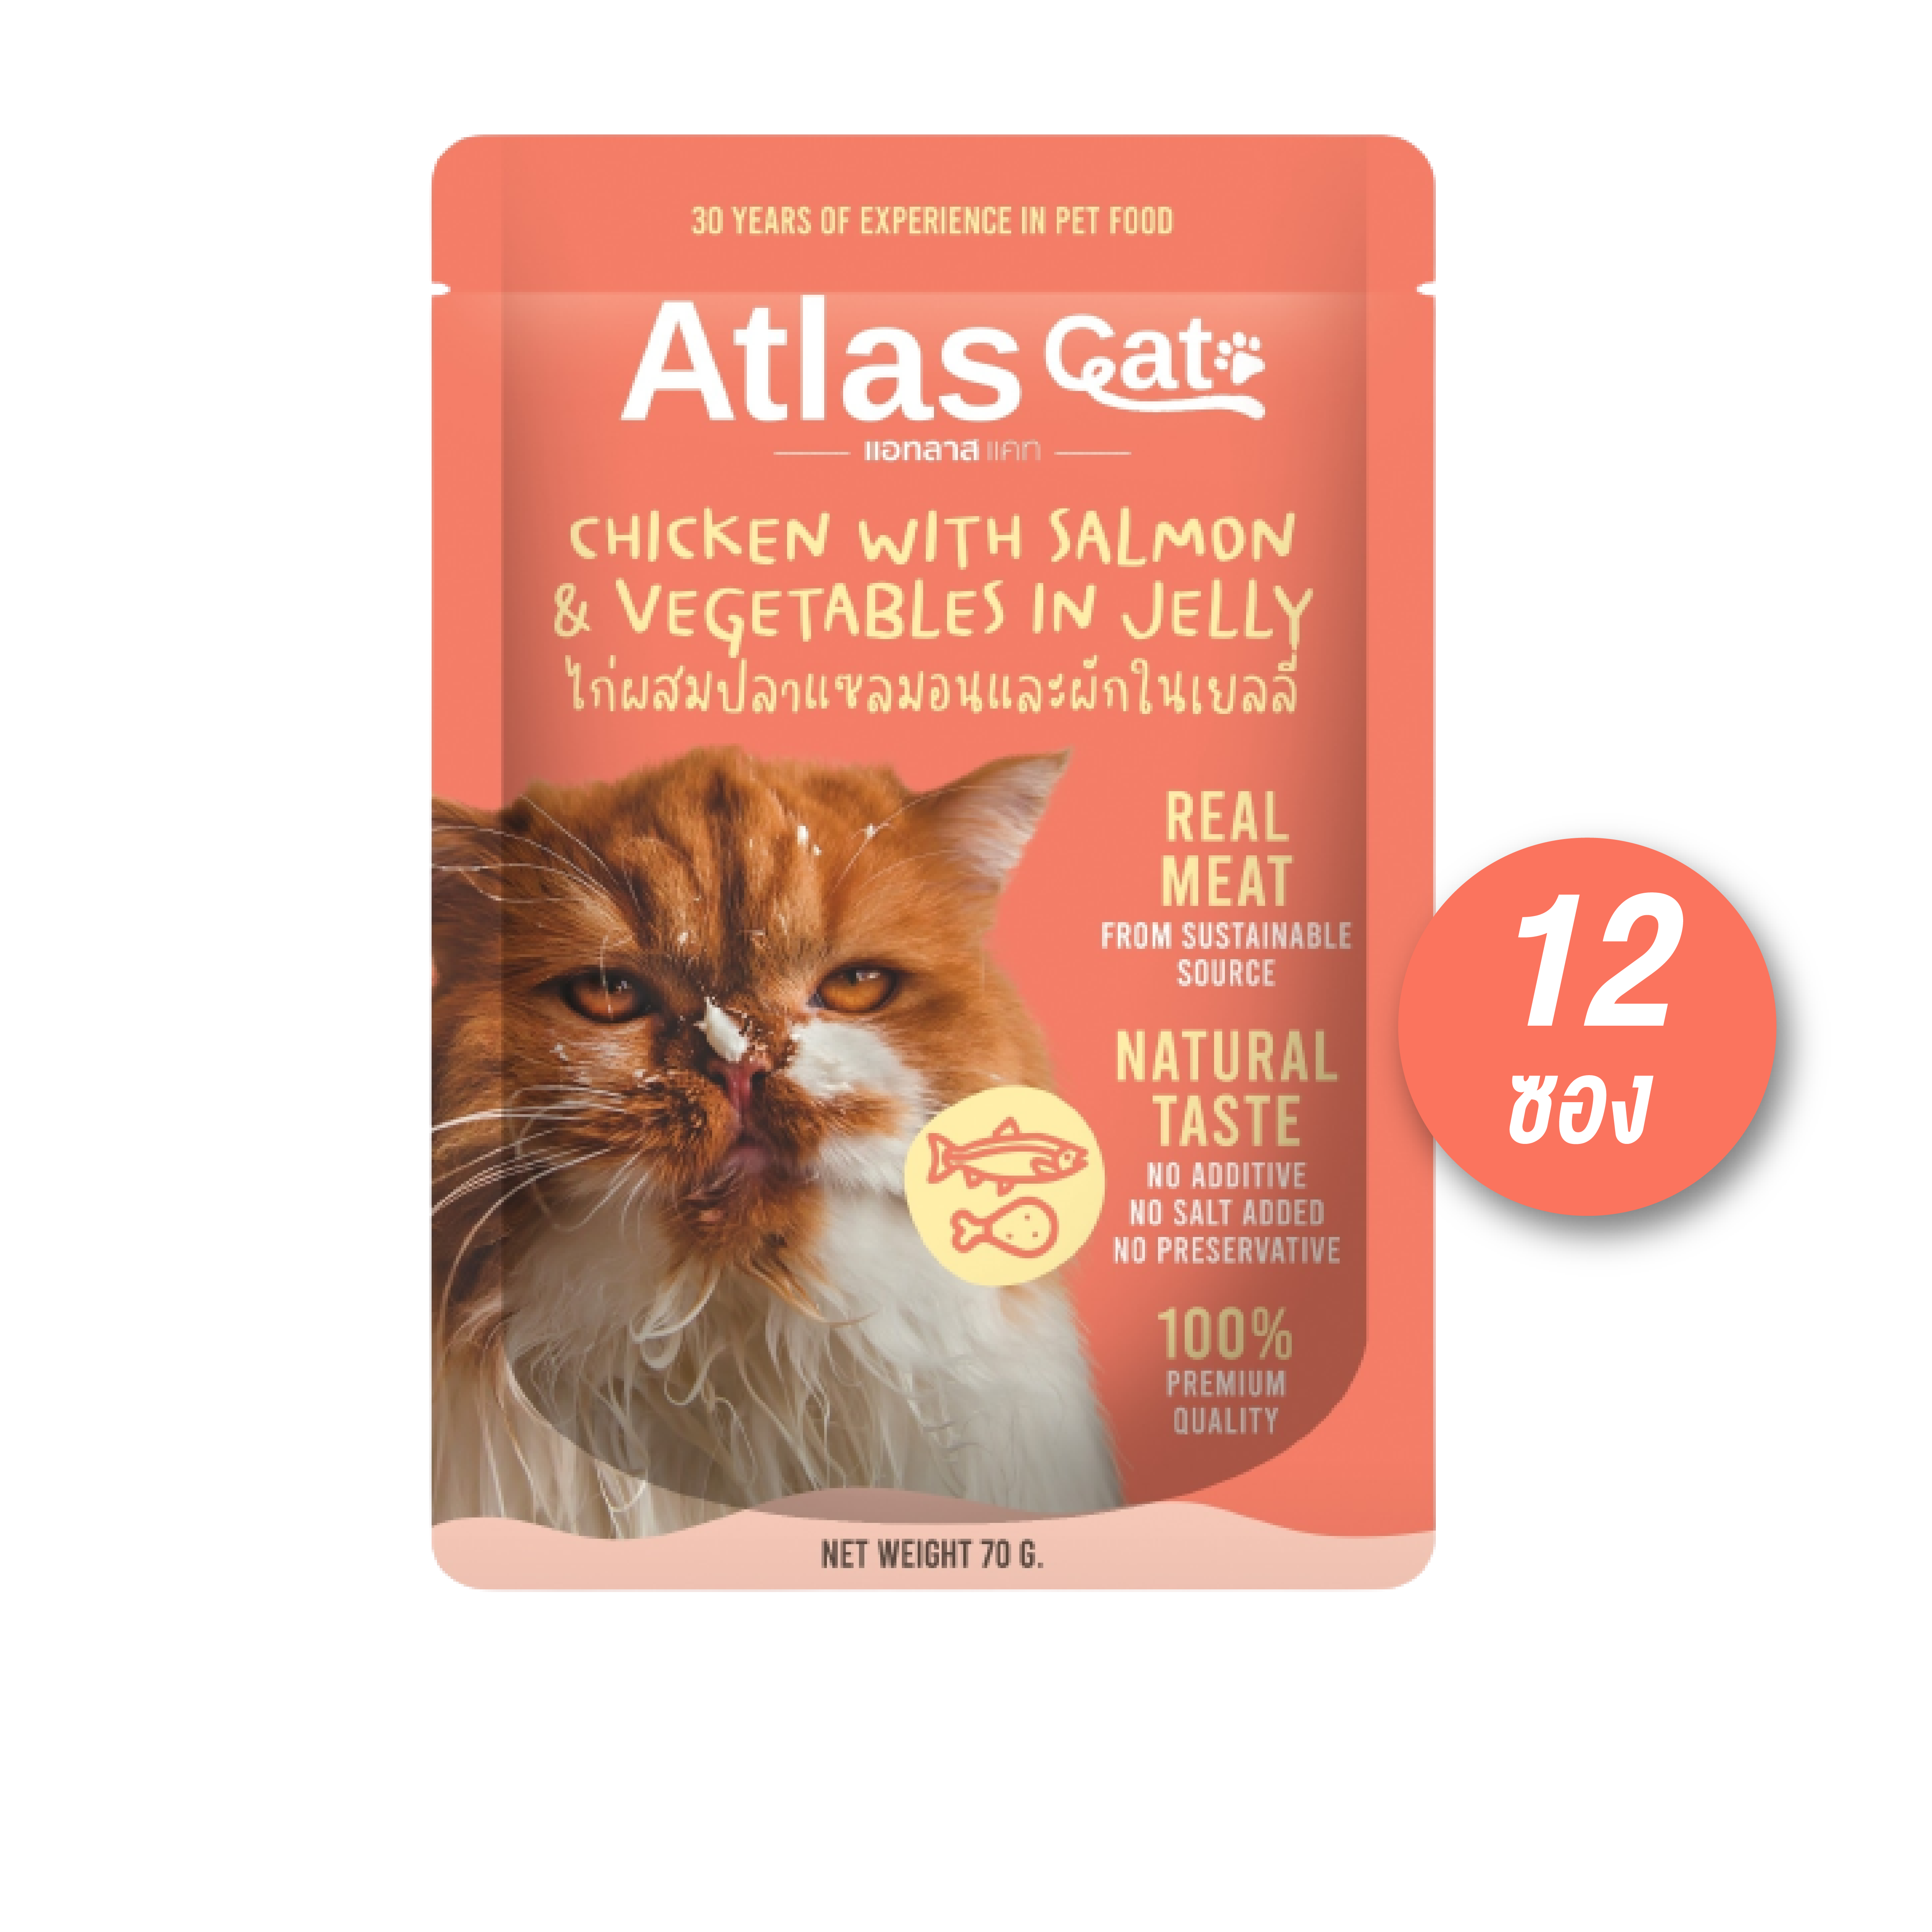 Atlas Cat Complementary ไก่ผสมปลาแซลมอนและผักในเยลลี่ 70กรัม.Chicken with Salmon & Vegetables in Jelly สูตรอาหารเปียก